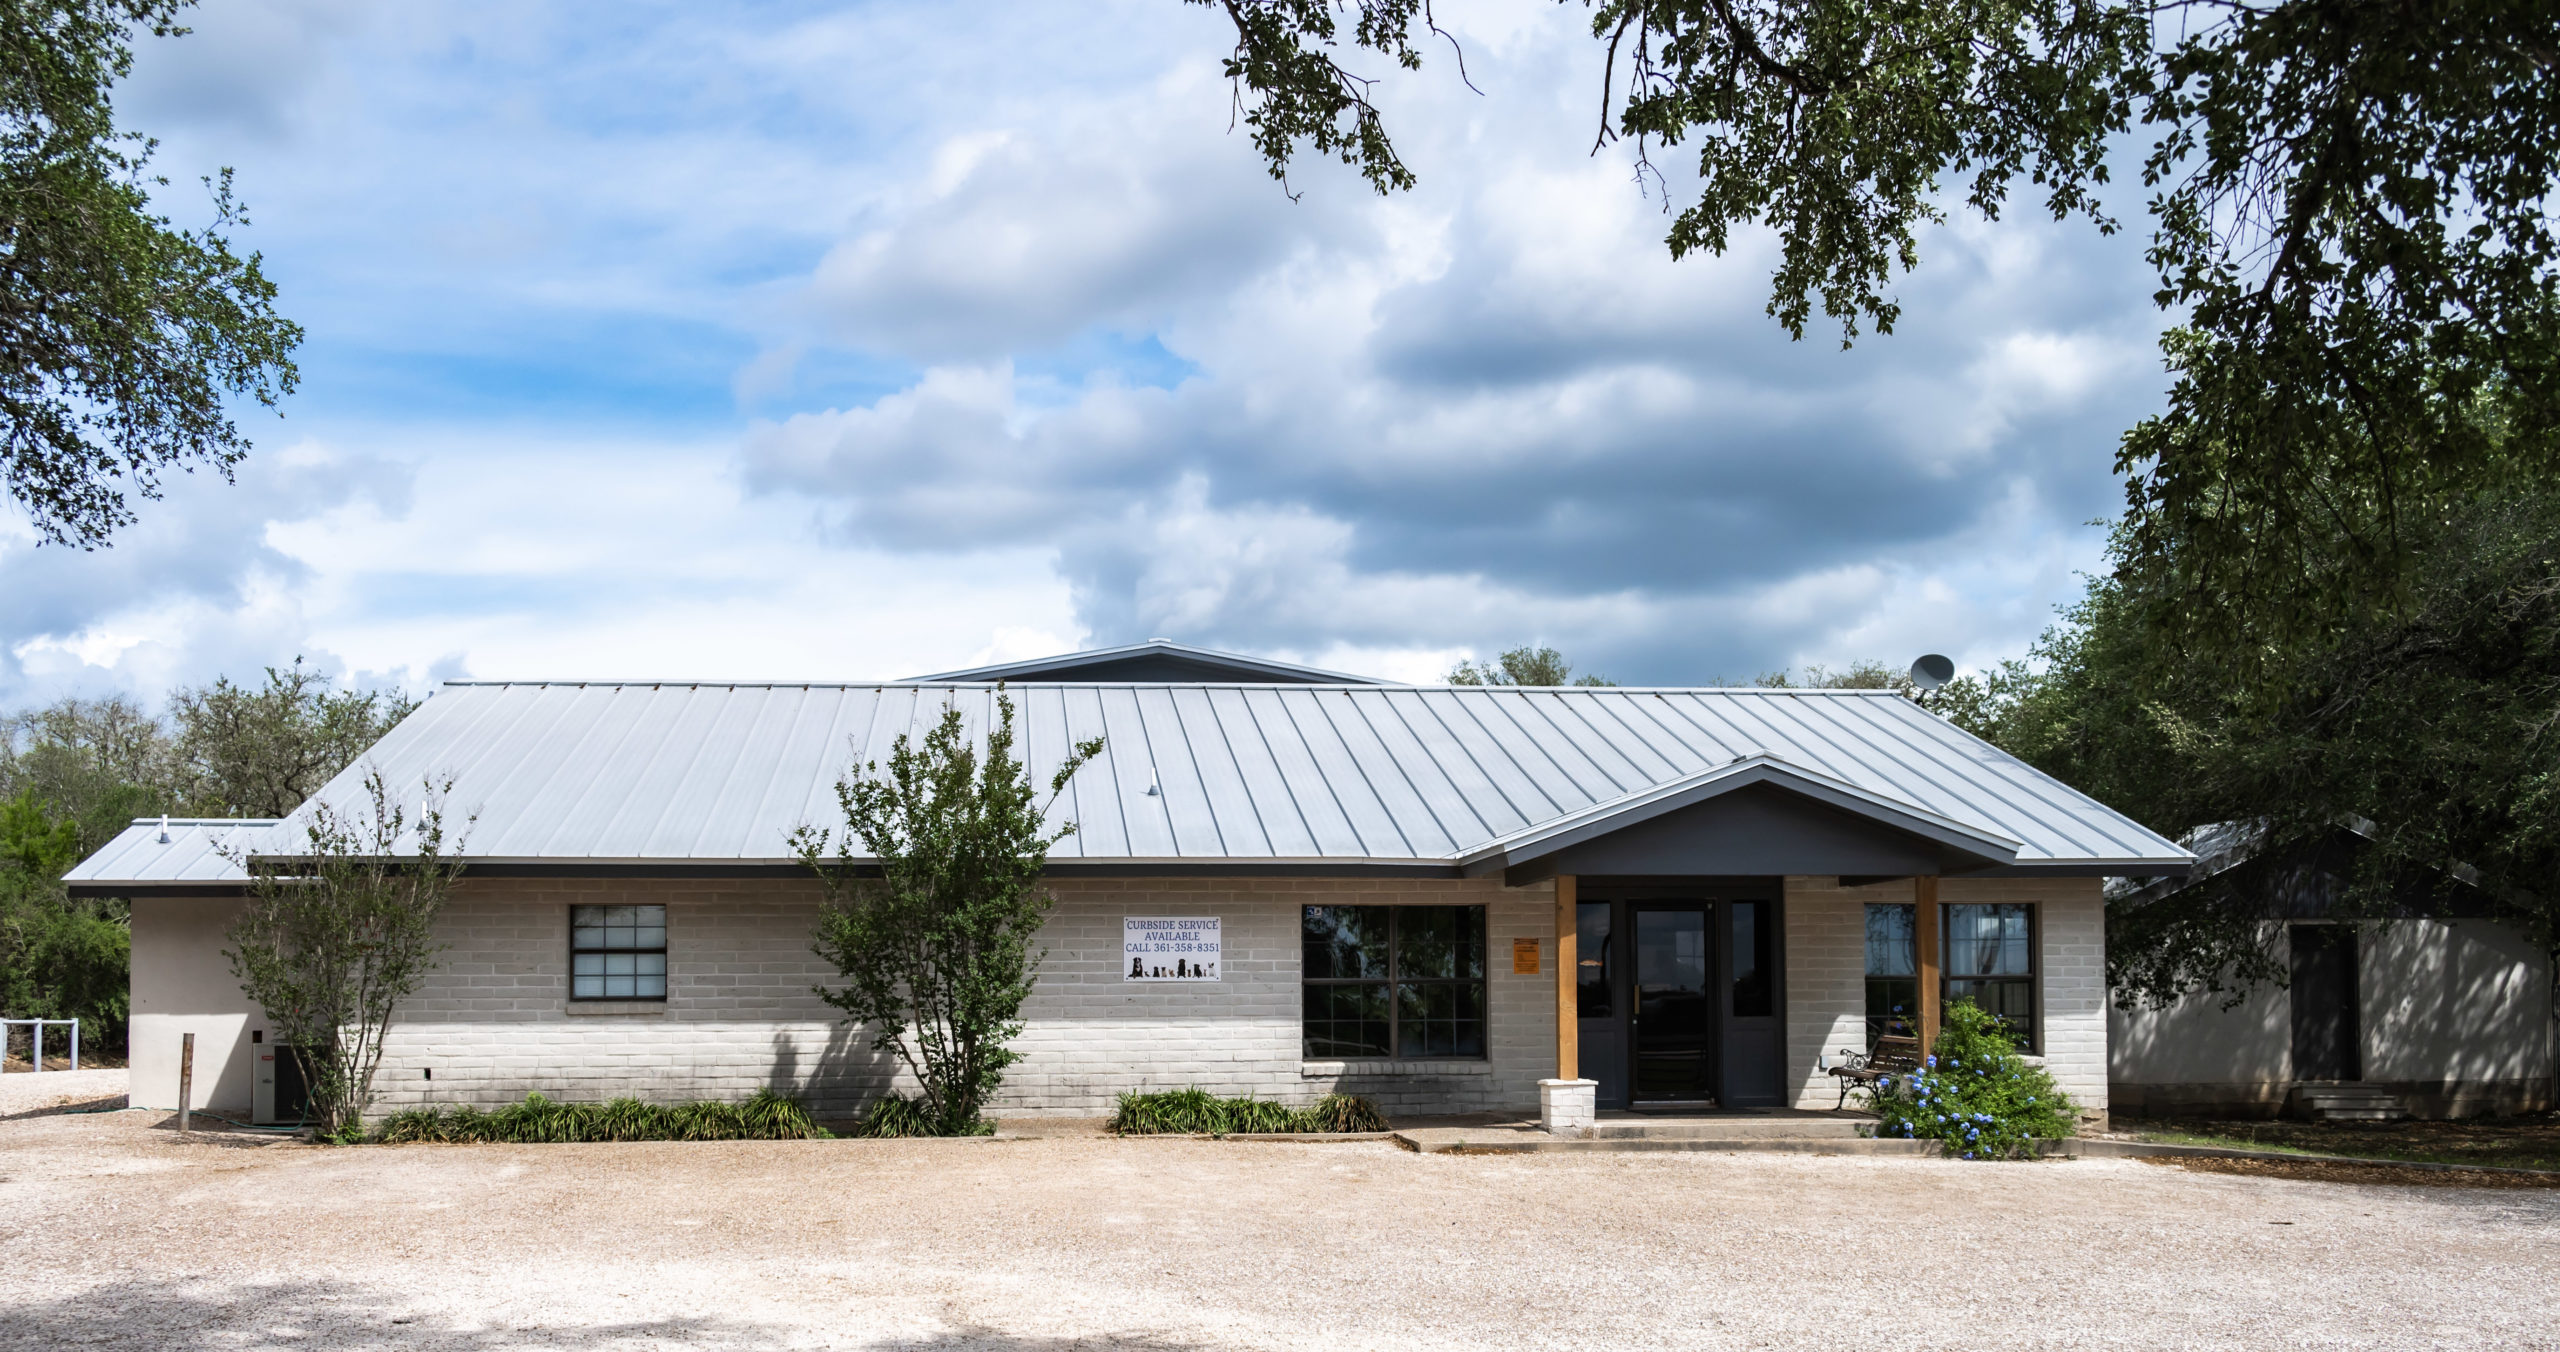 south texas veterinary clinic building